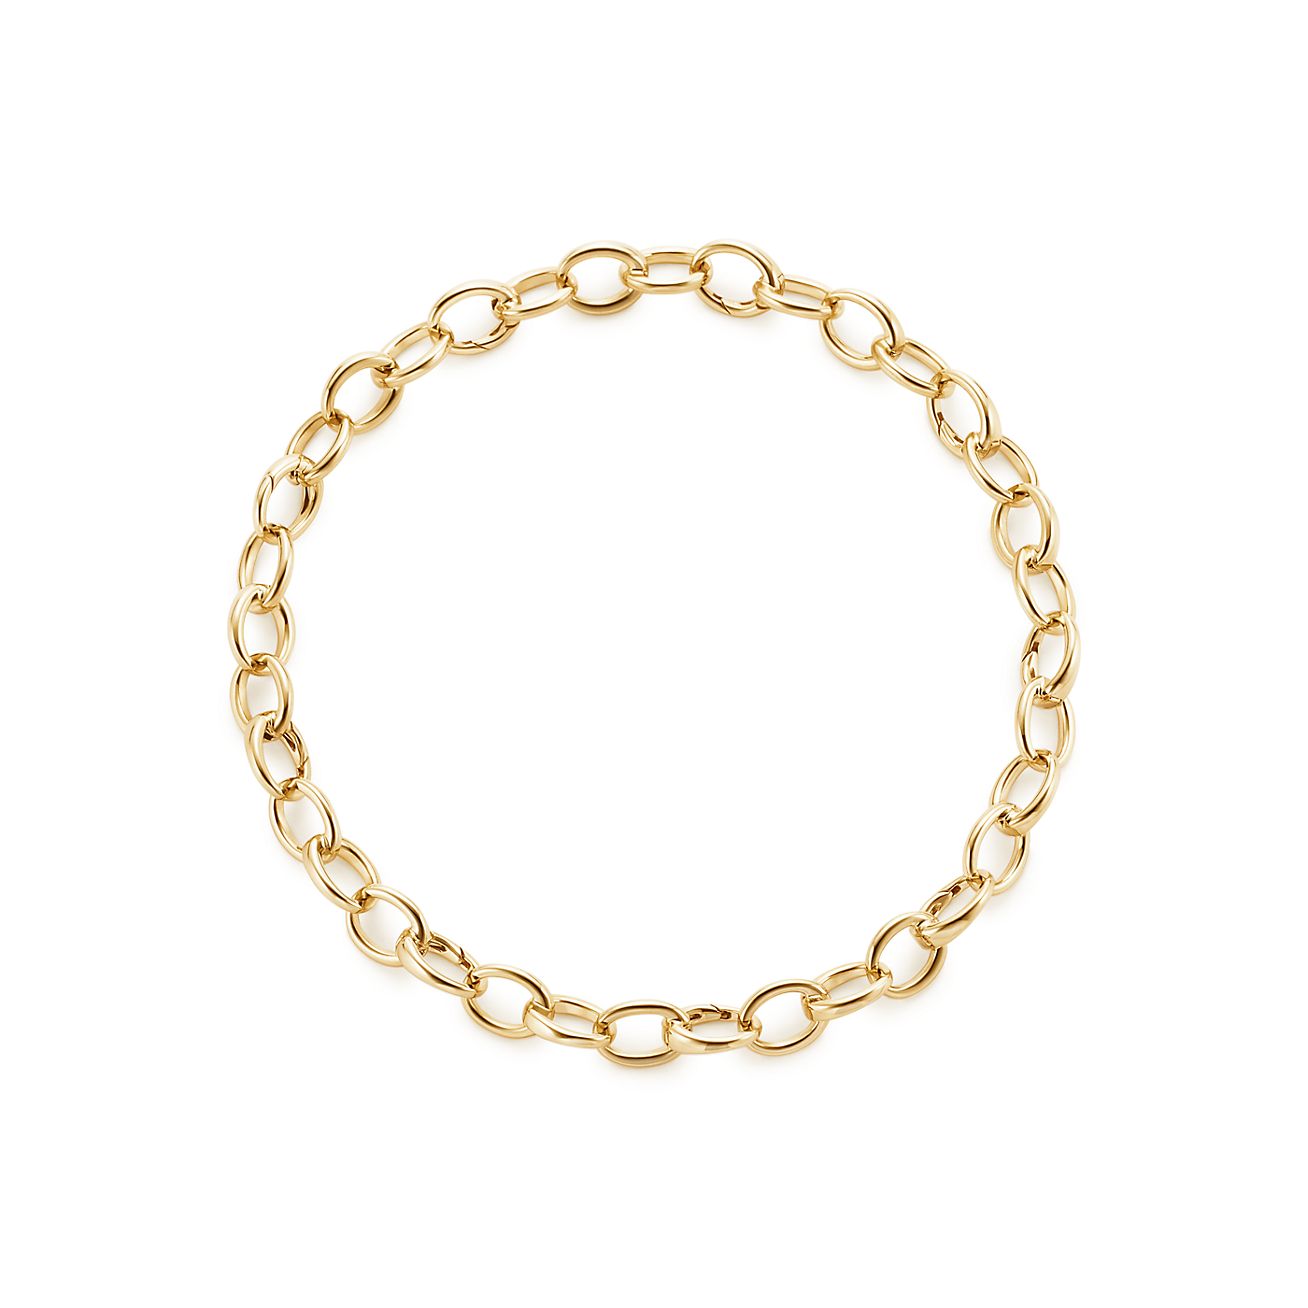 Oval link bracelet in 18k gold, medium 